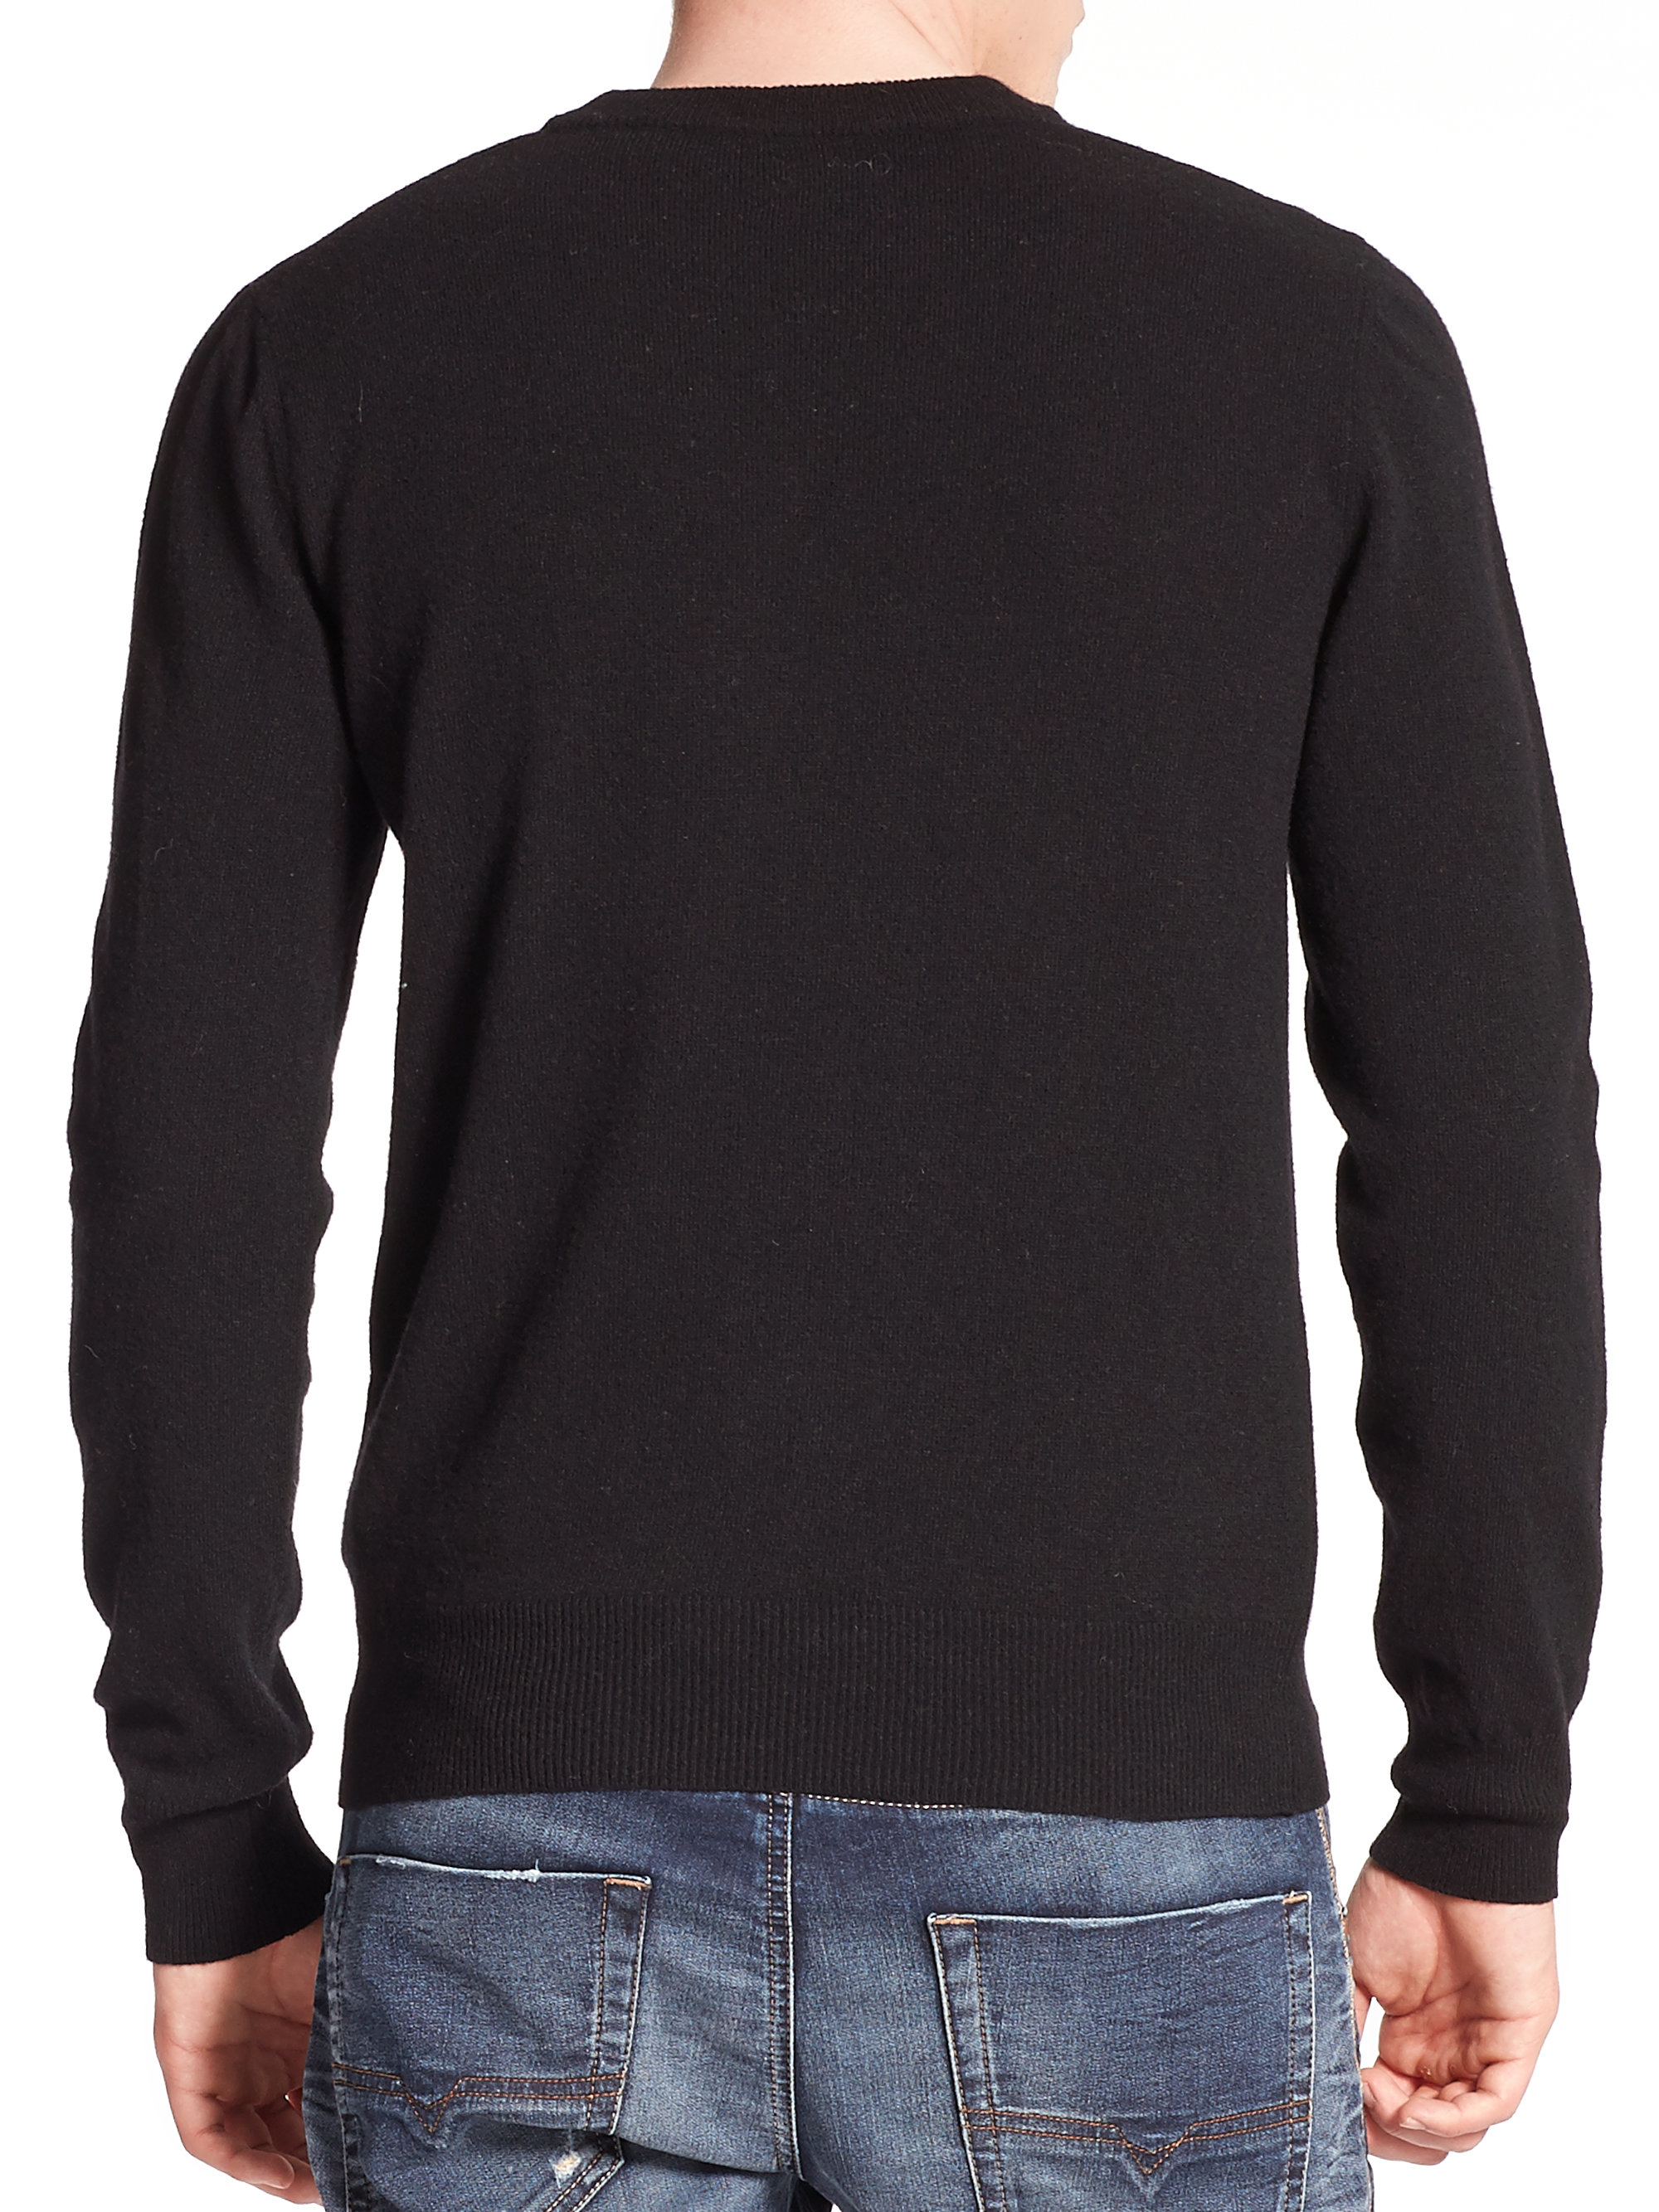 Lyst - Diesel Bad Dog Knit Sweater in Black for Men